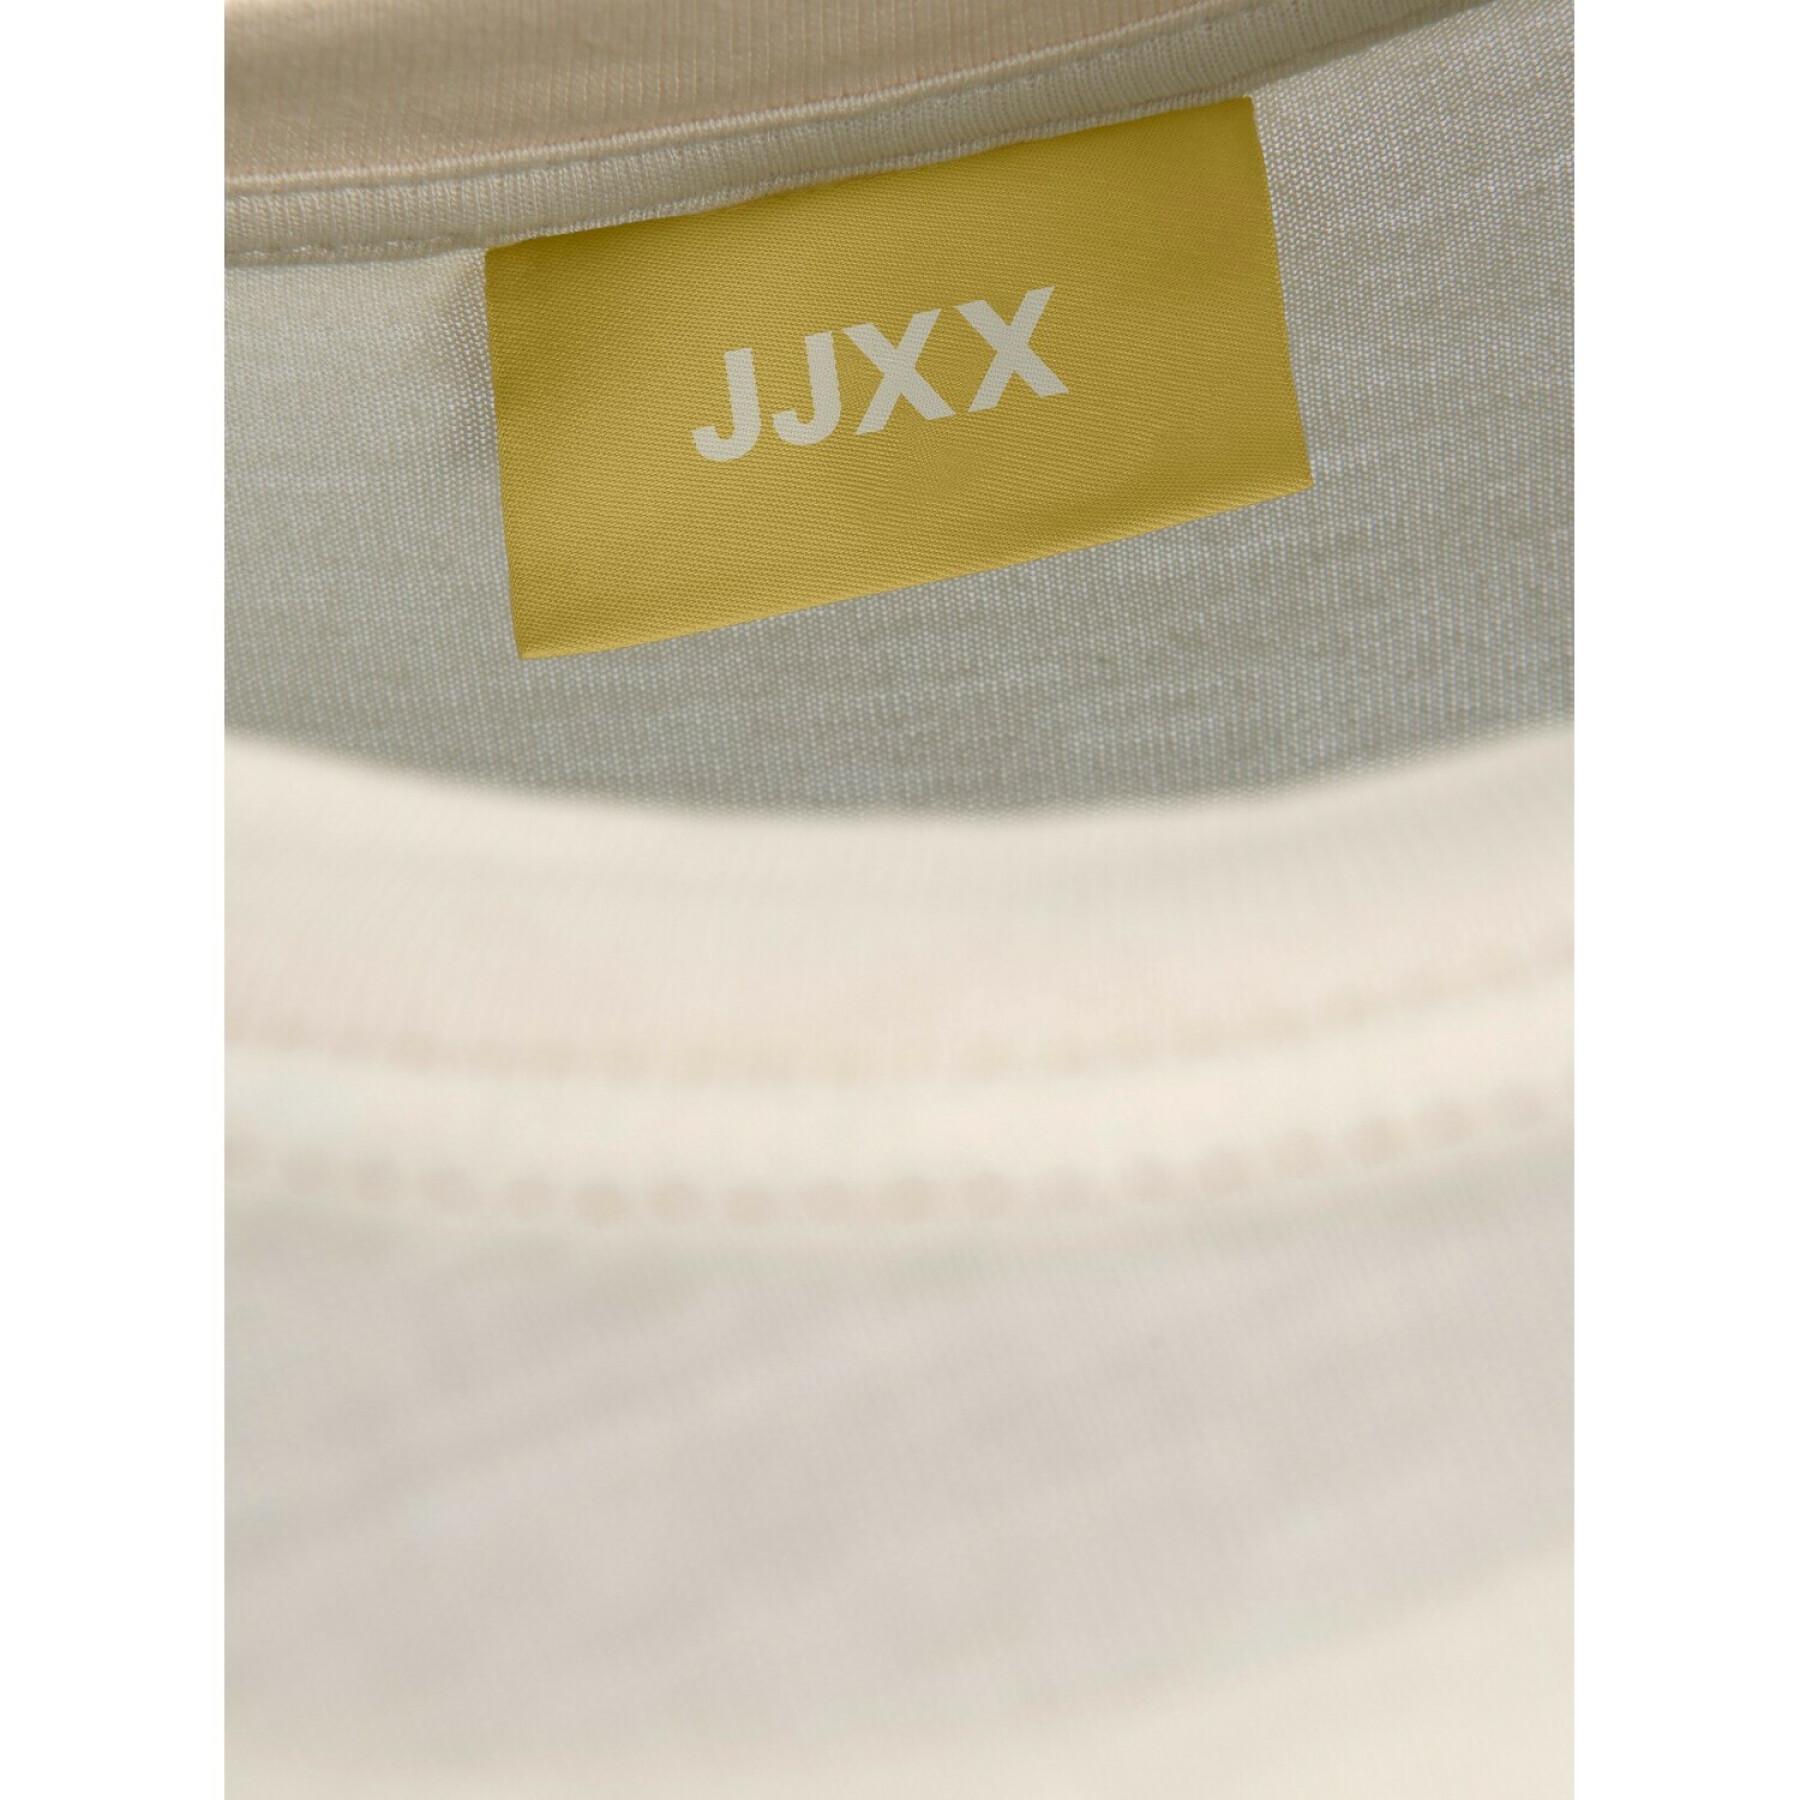 Camiseta de mujer JJXX diana